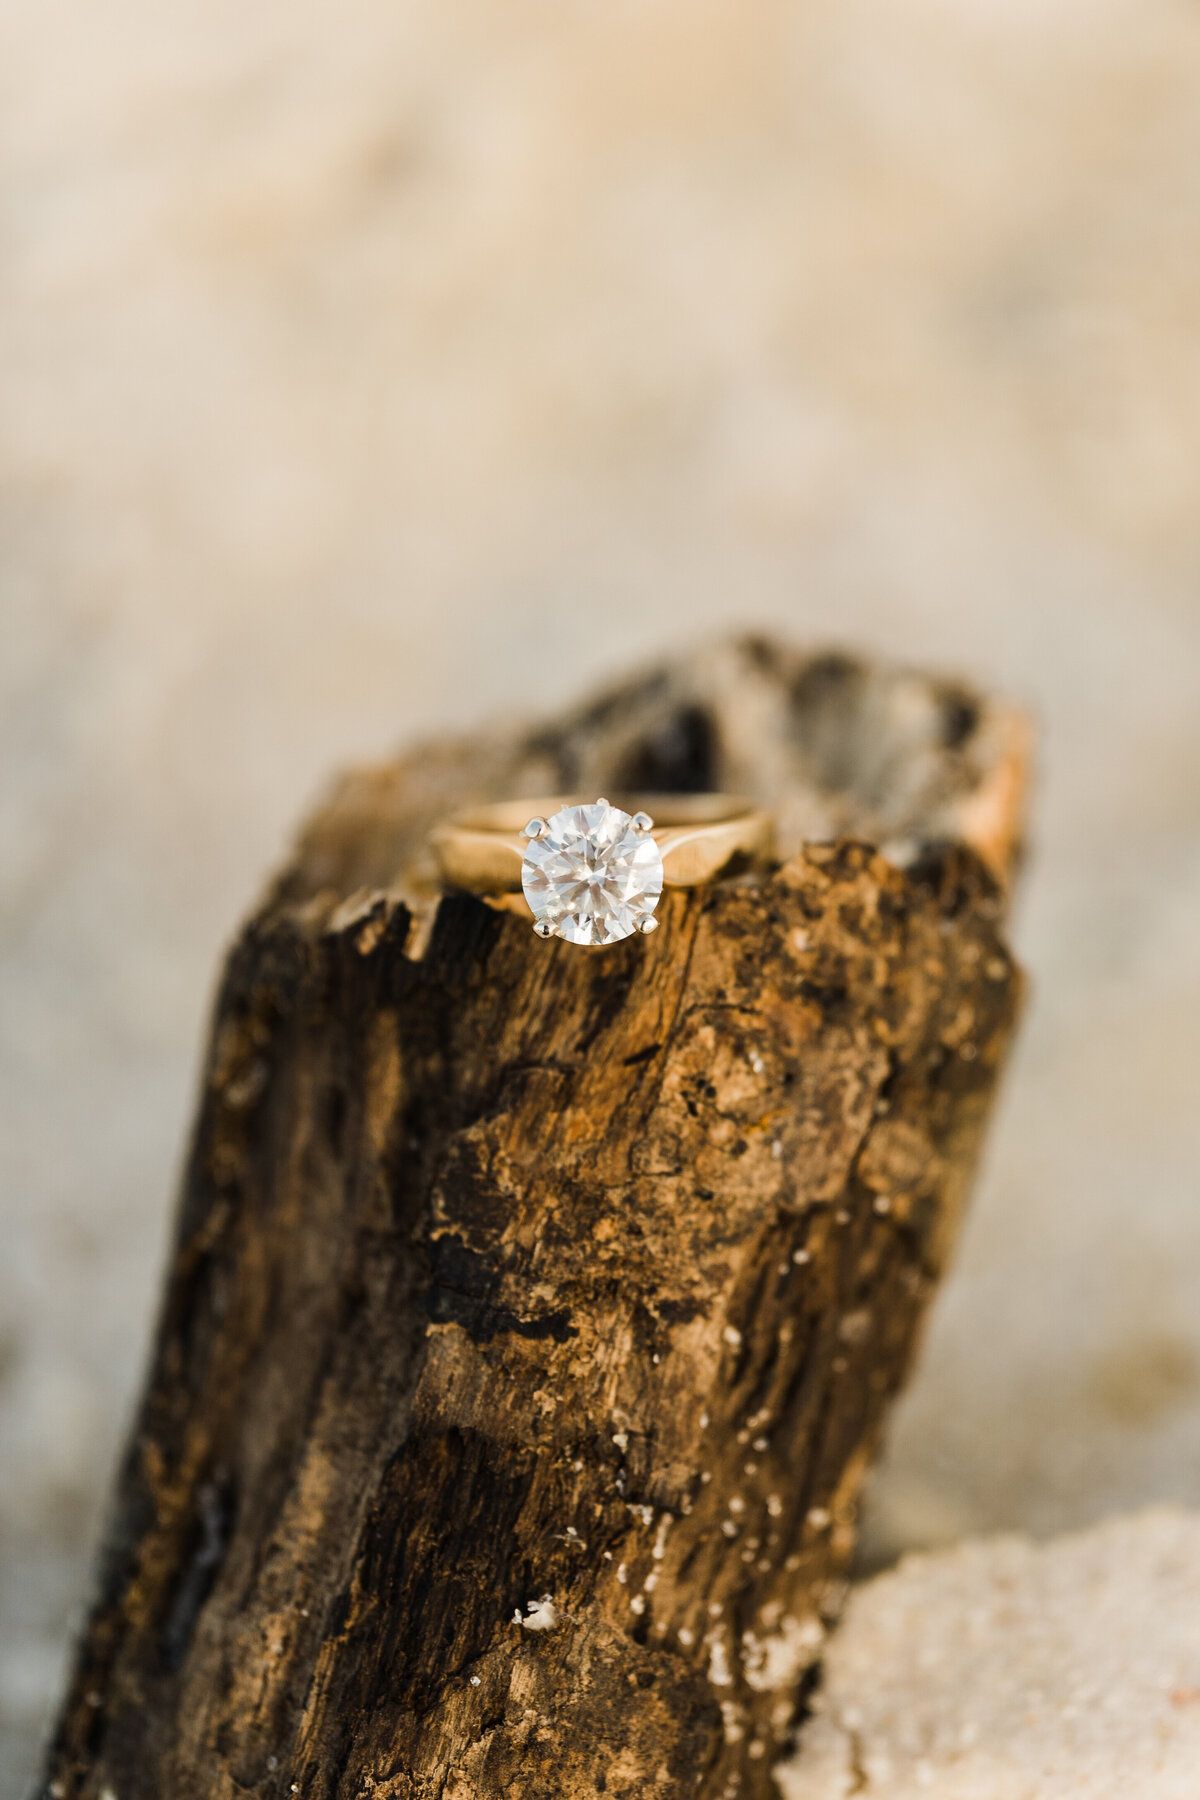 Diamond ring on a branch